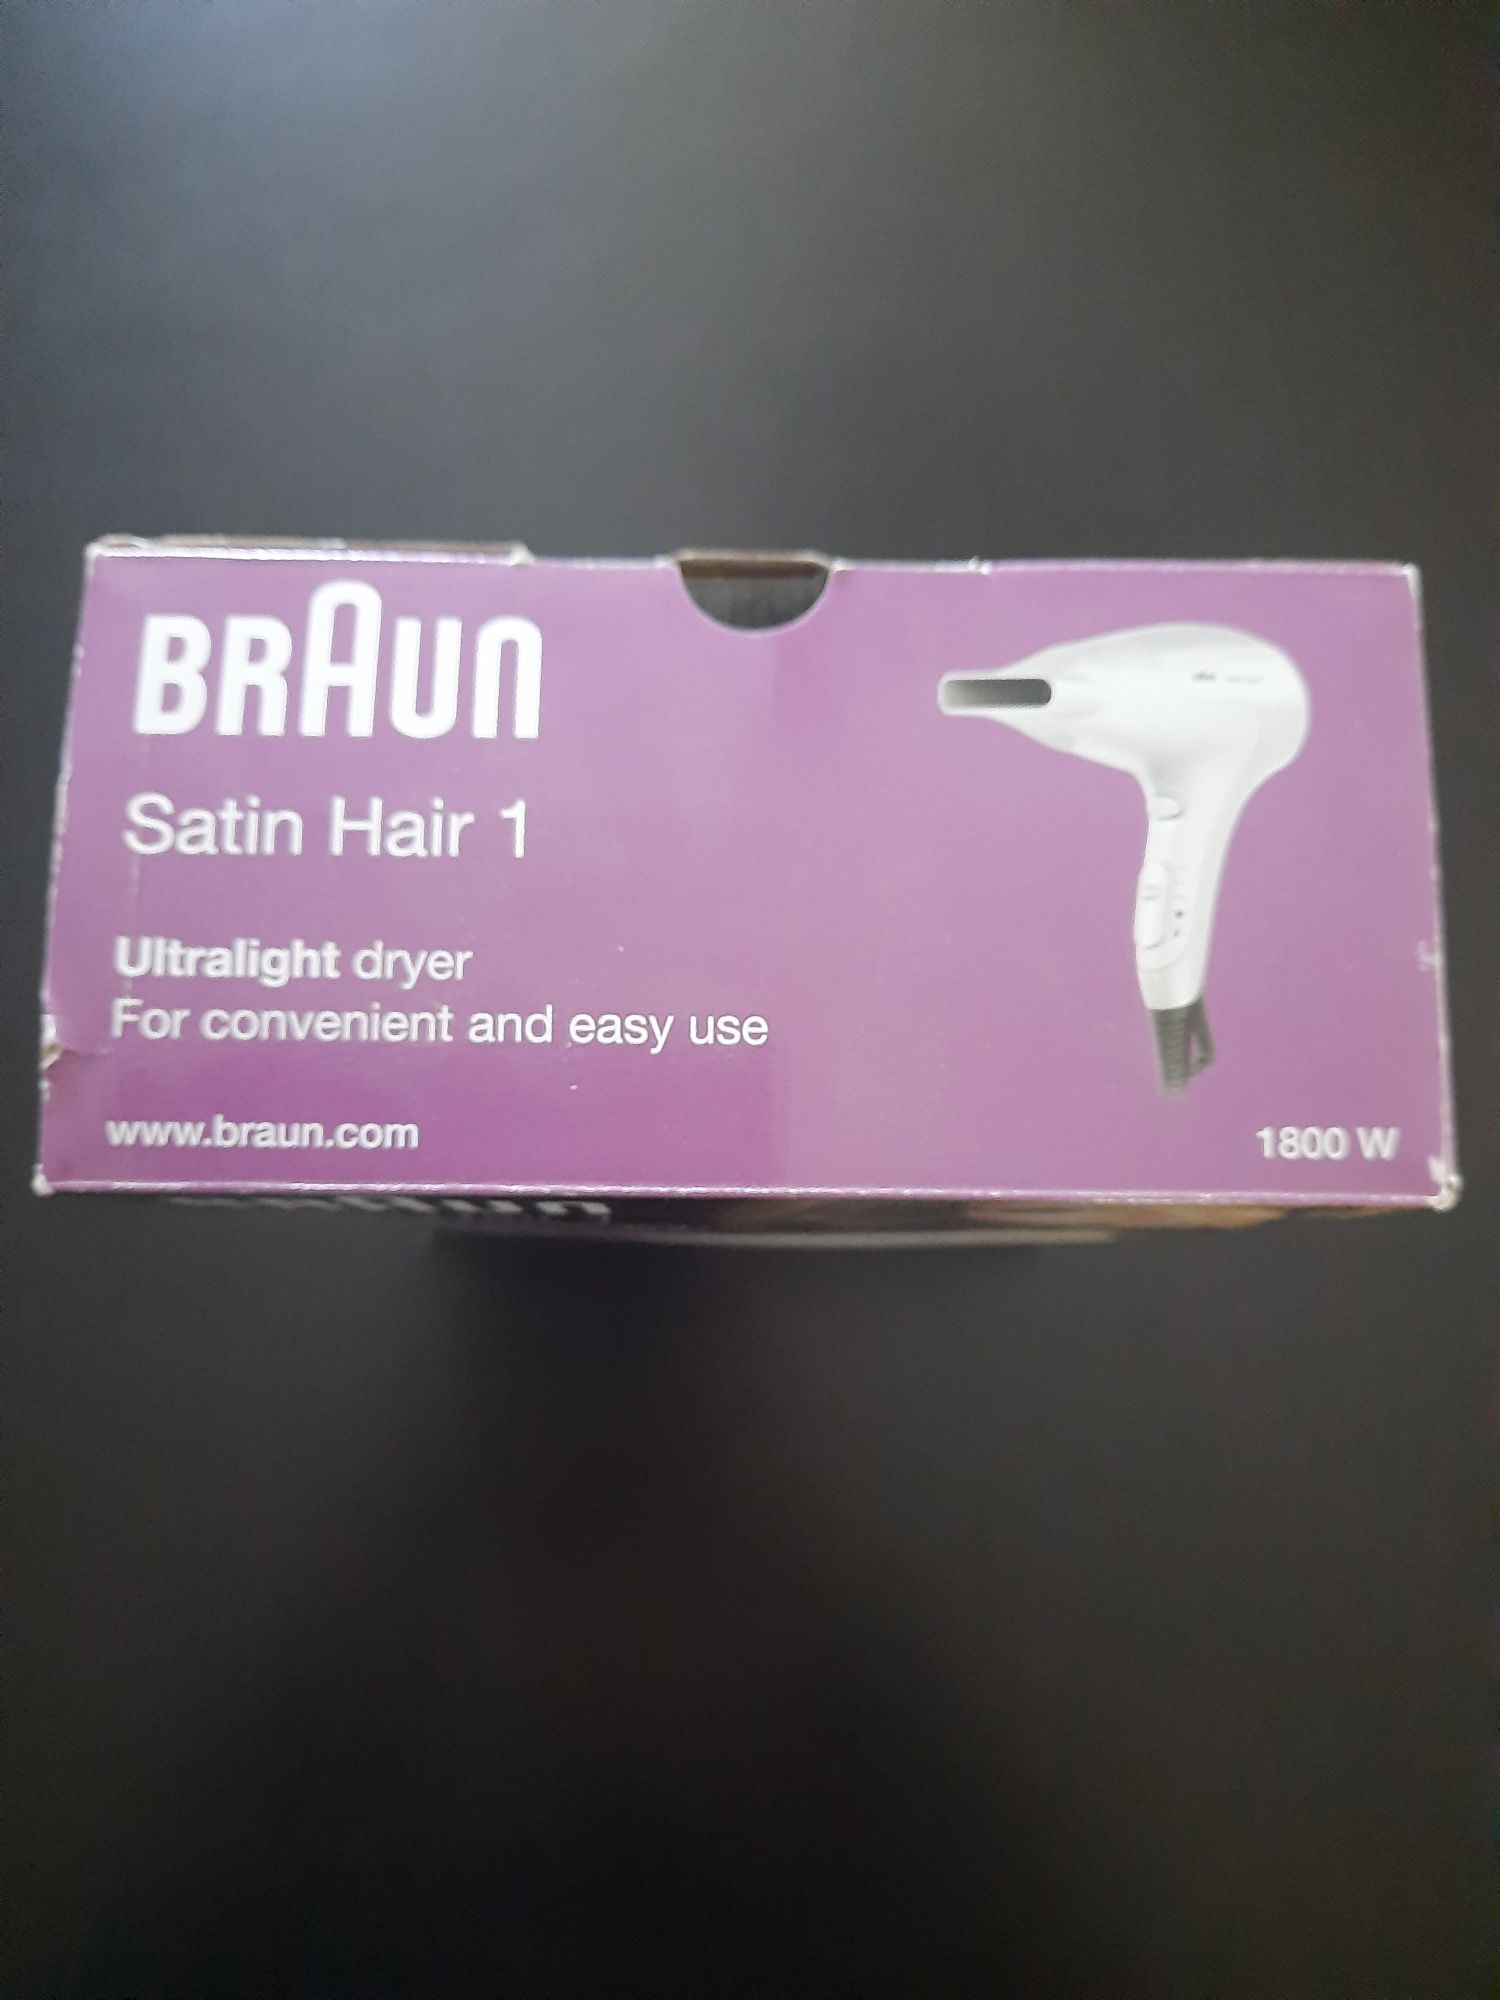 Biała suszarka braun satin hair 1 nowa 1800W ultra light